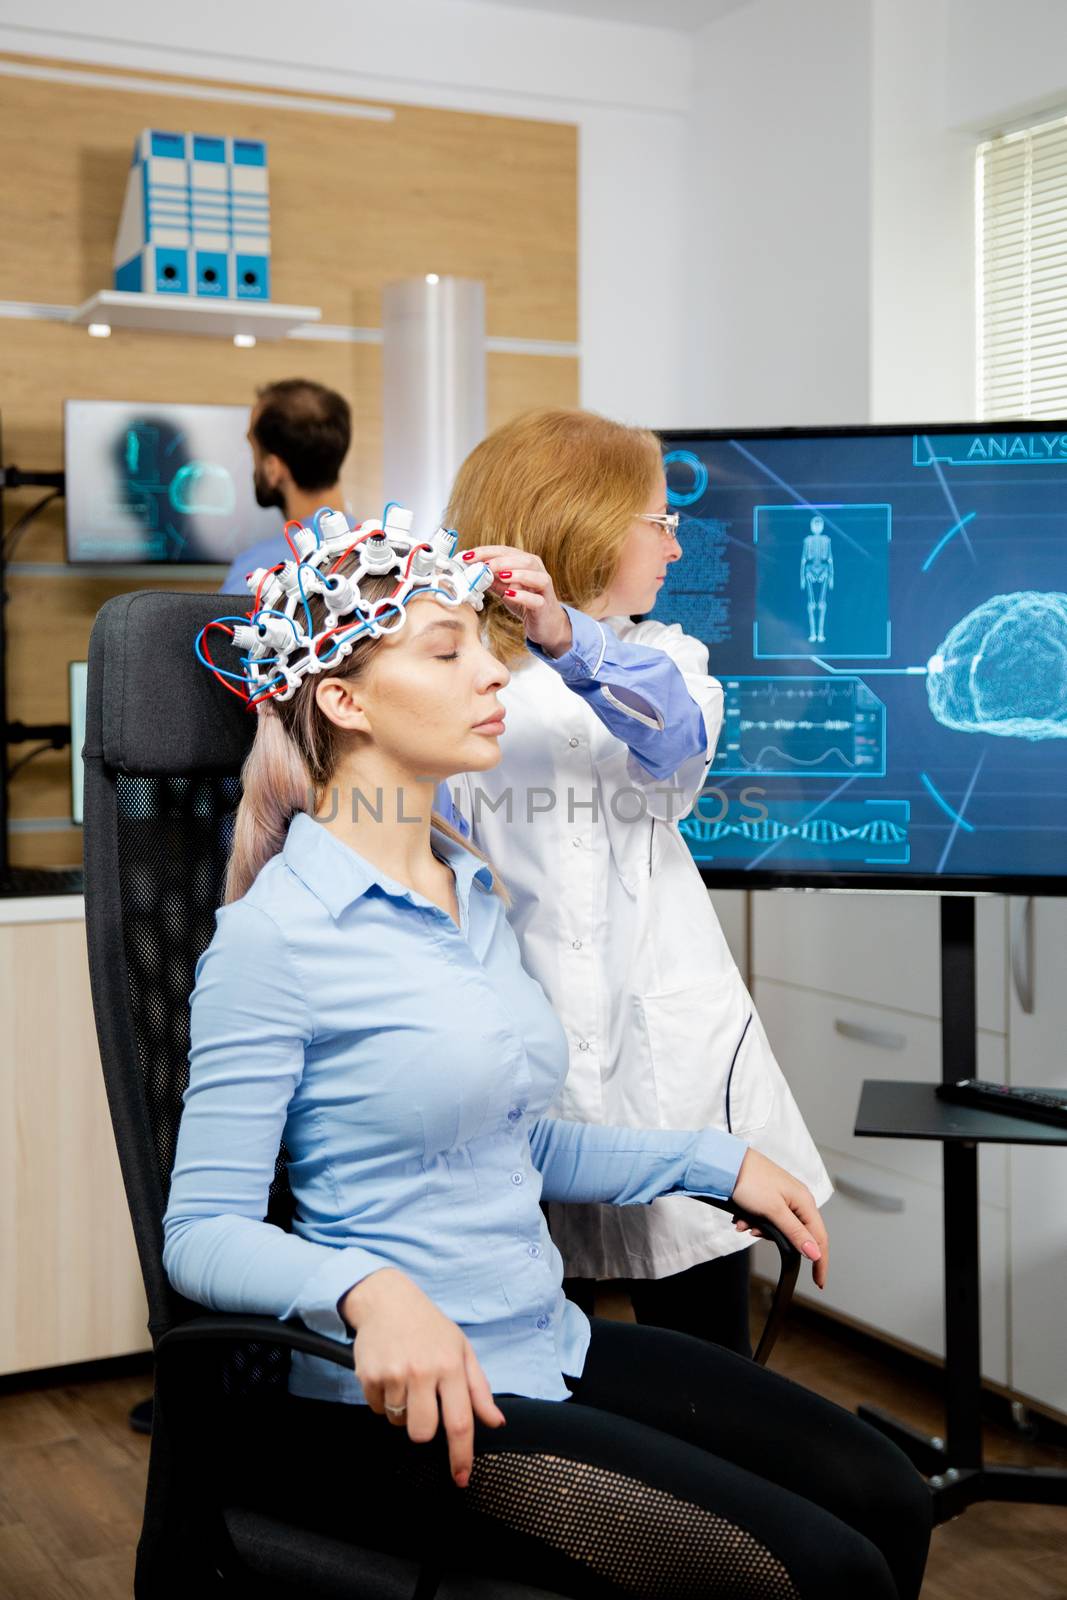 Doctor preparing brain waves scanning headset for tests. Doctor scanning brain activity